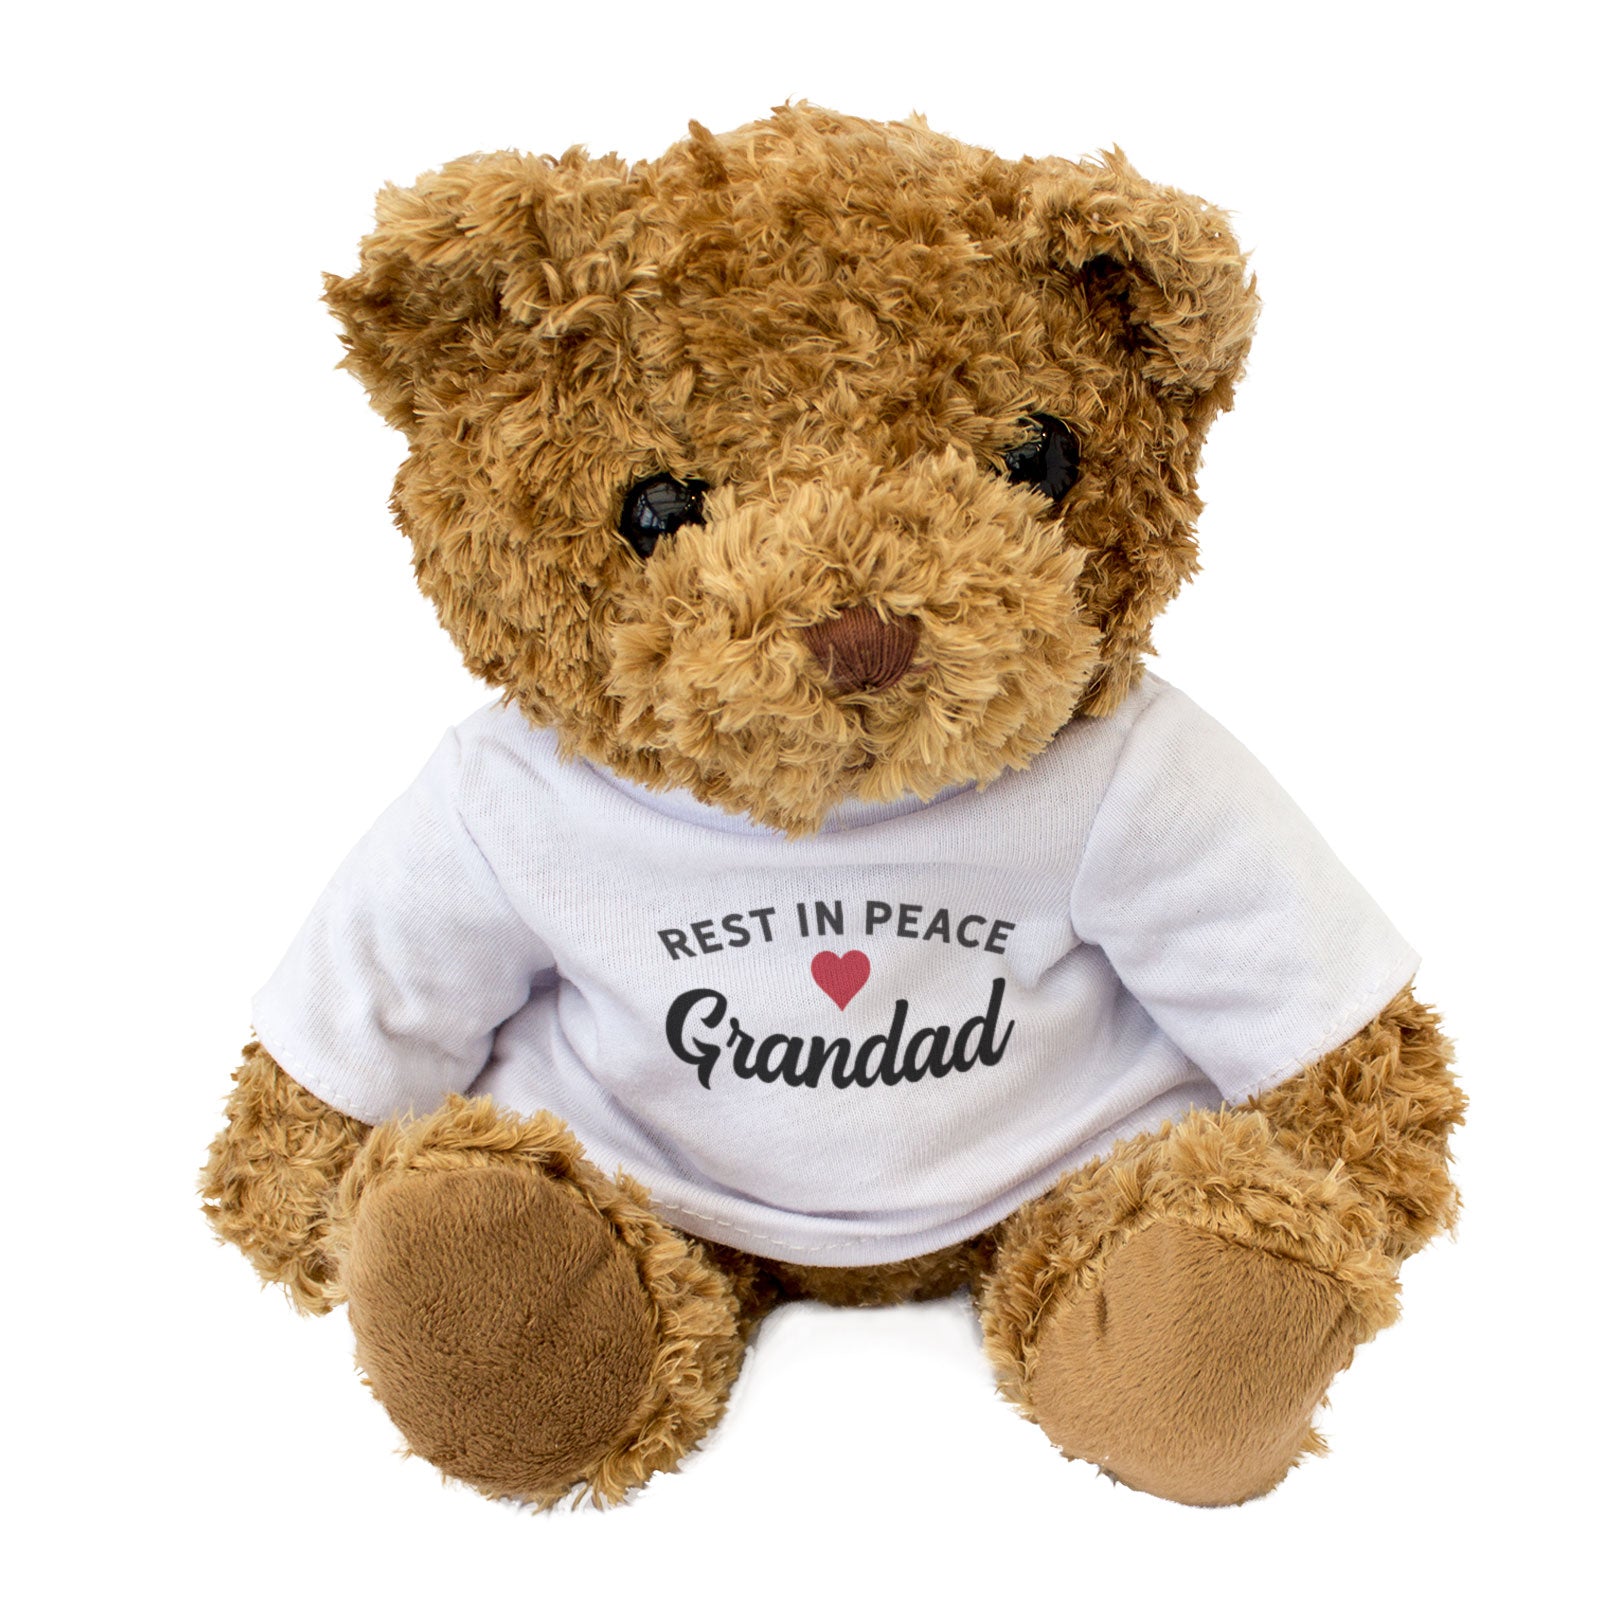 RIP Grandad - Teddy Bear - Rest In Peace